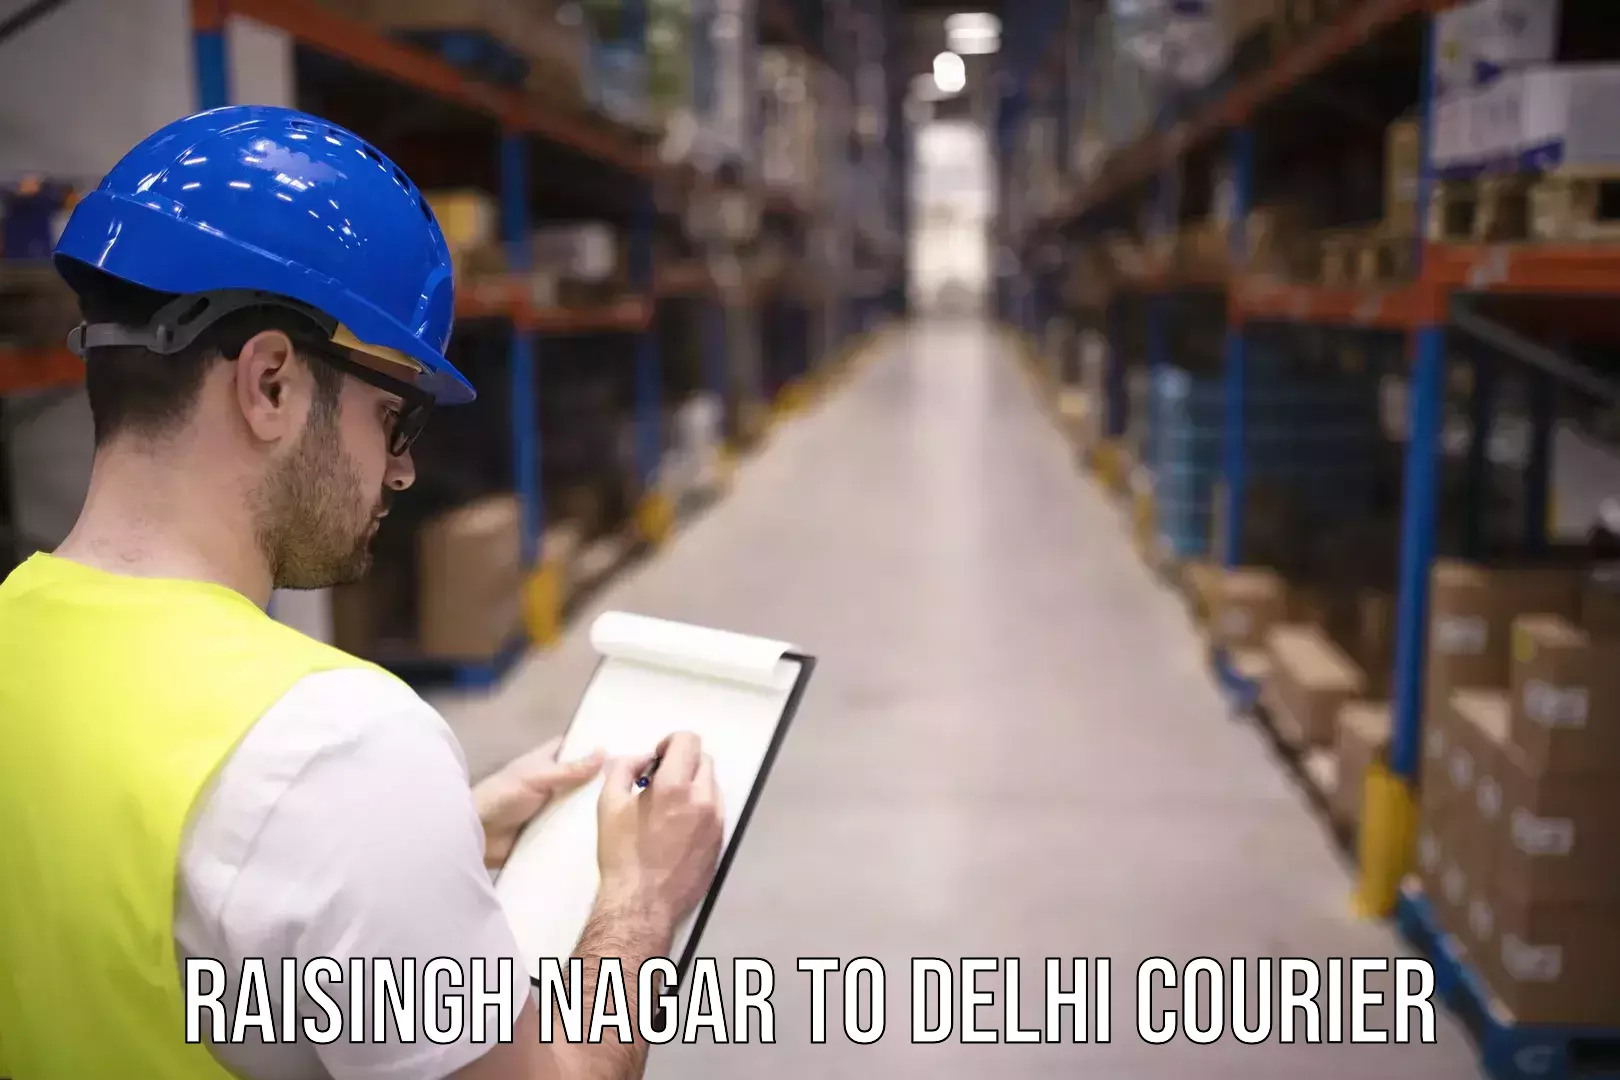 Express courier facilities Raisingh Nagar to University of Delhi